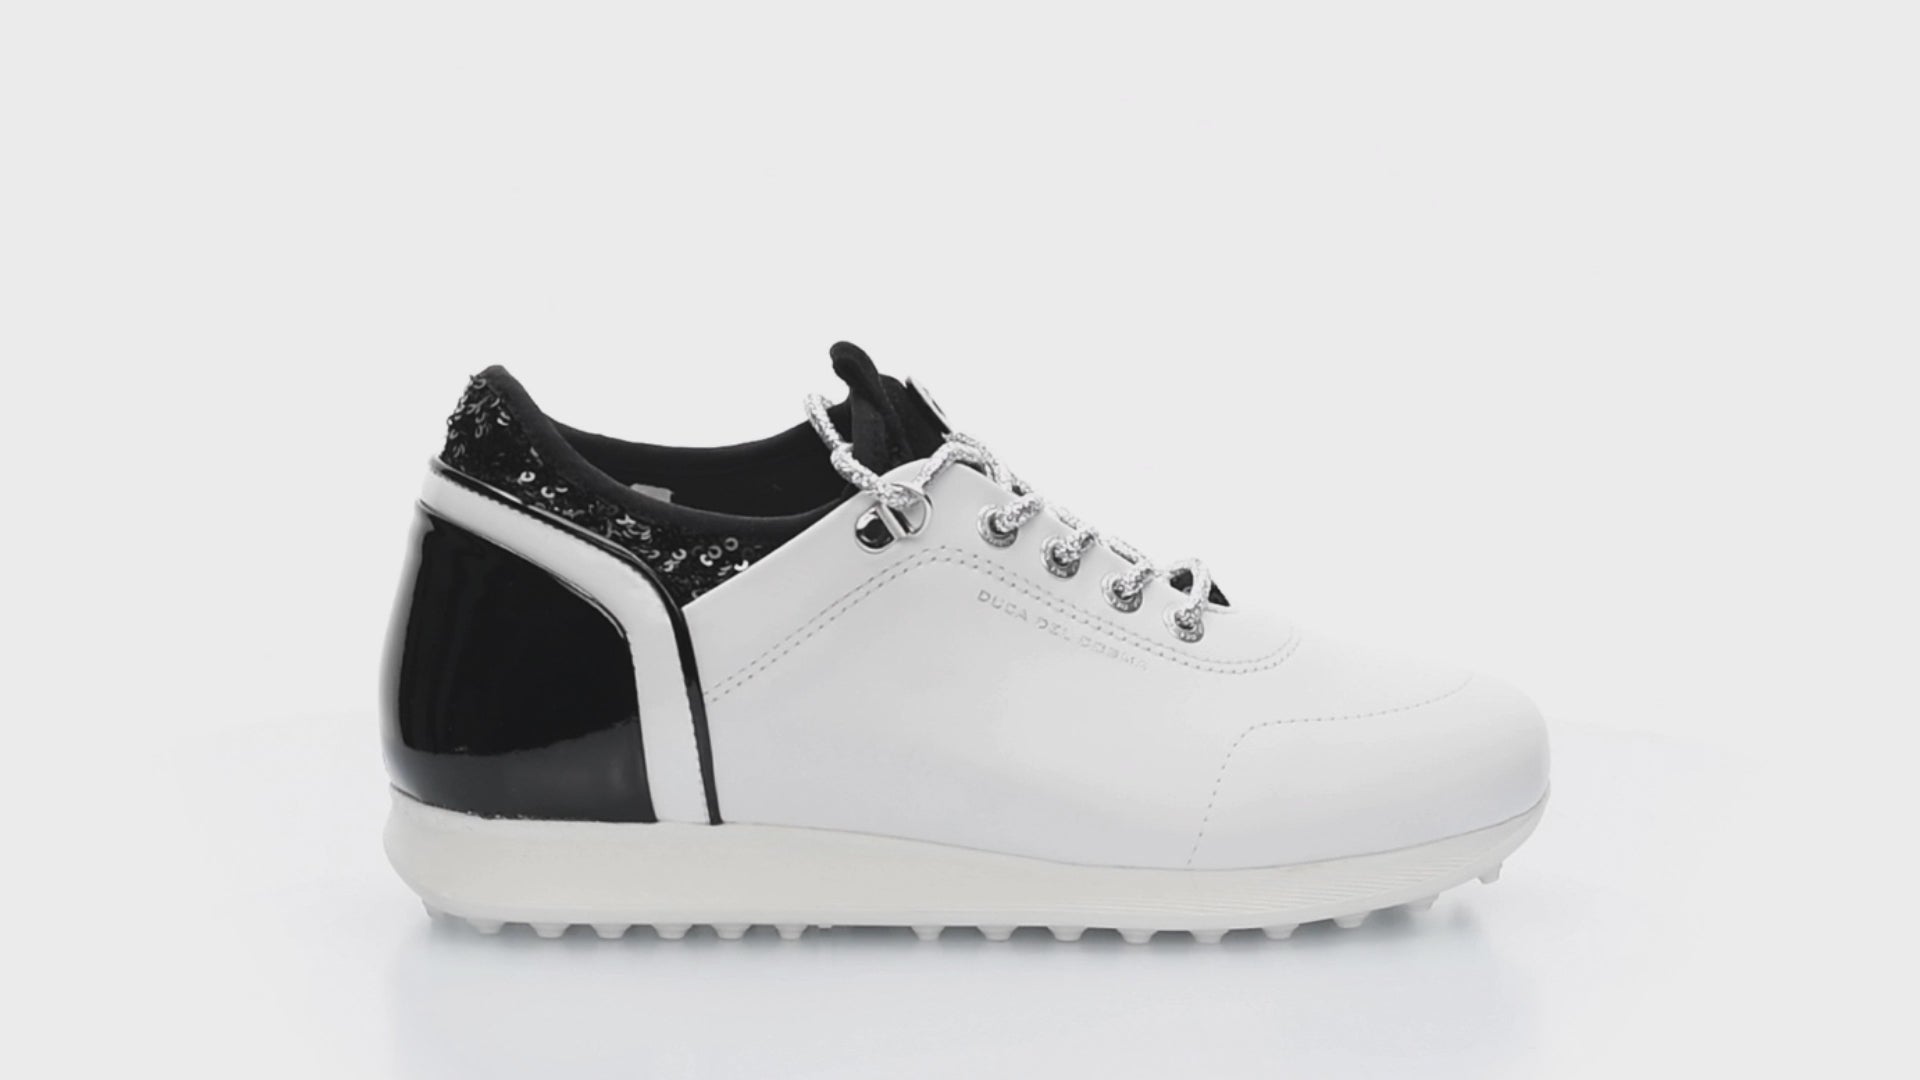 Pose White/Black Women's Golf Shoe